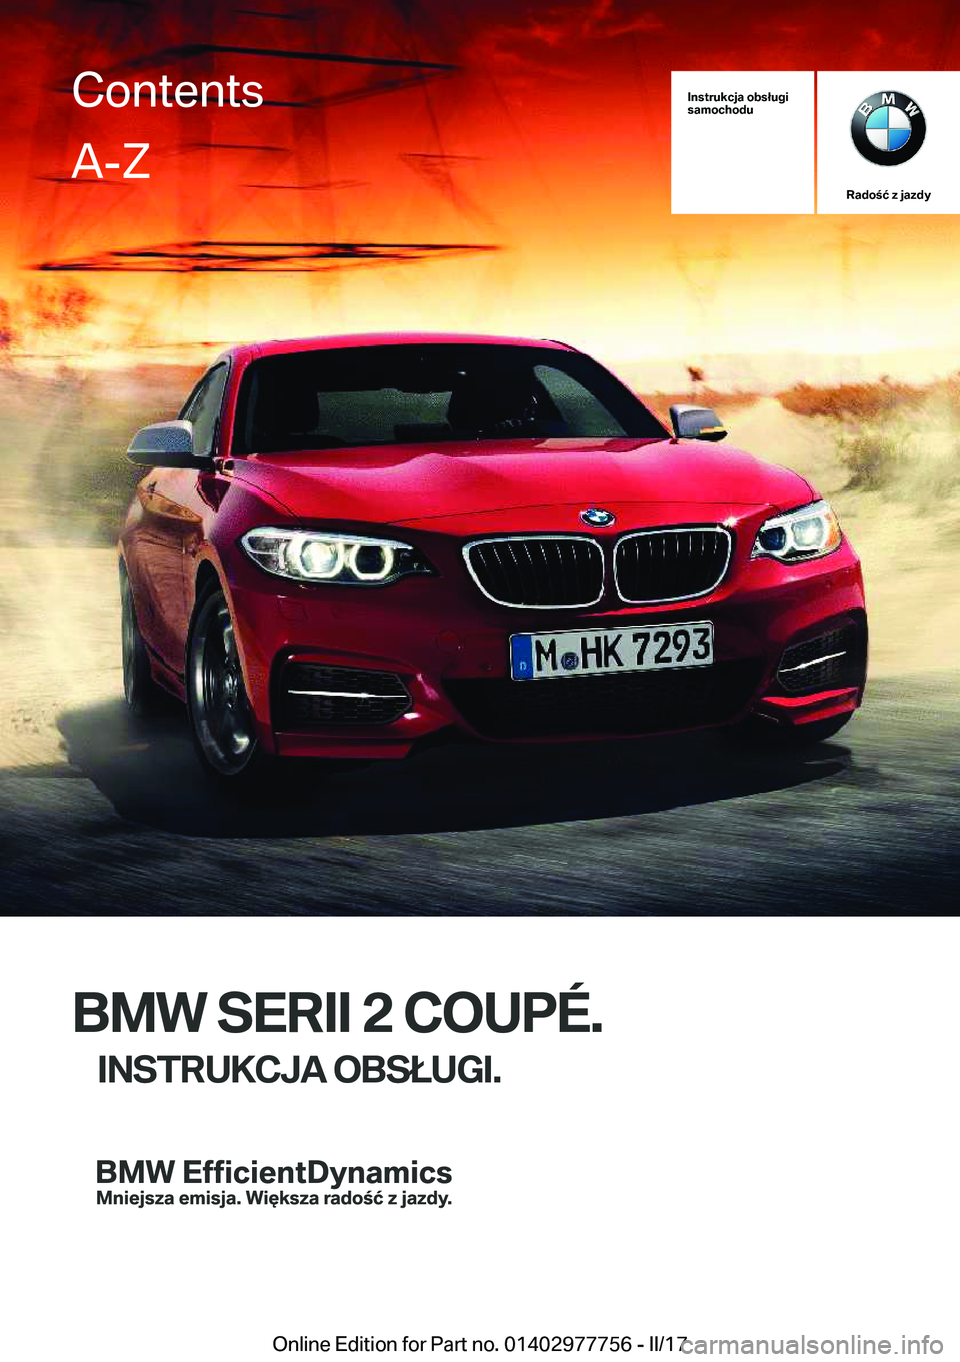 BMW 2 SERIES COUPE 2017  Instrukcja obsługi (in Polish) �I�n�s�t�r�u�k�c�j�a��o�b�s�ł�u�g�i
�s�a�m�o�c�h�o�d�u
�R�a�d�o�